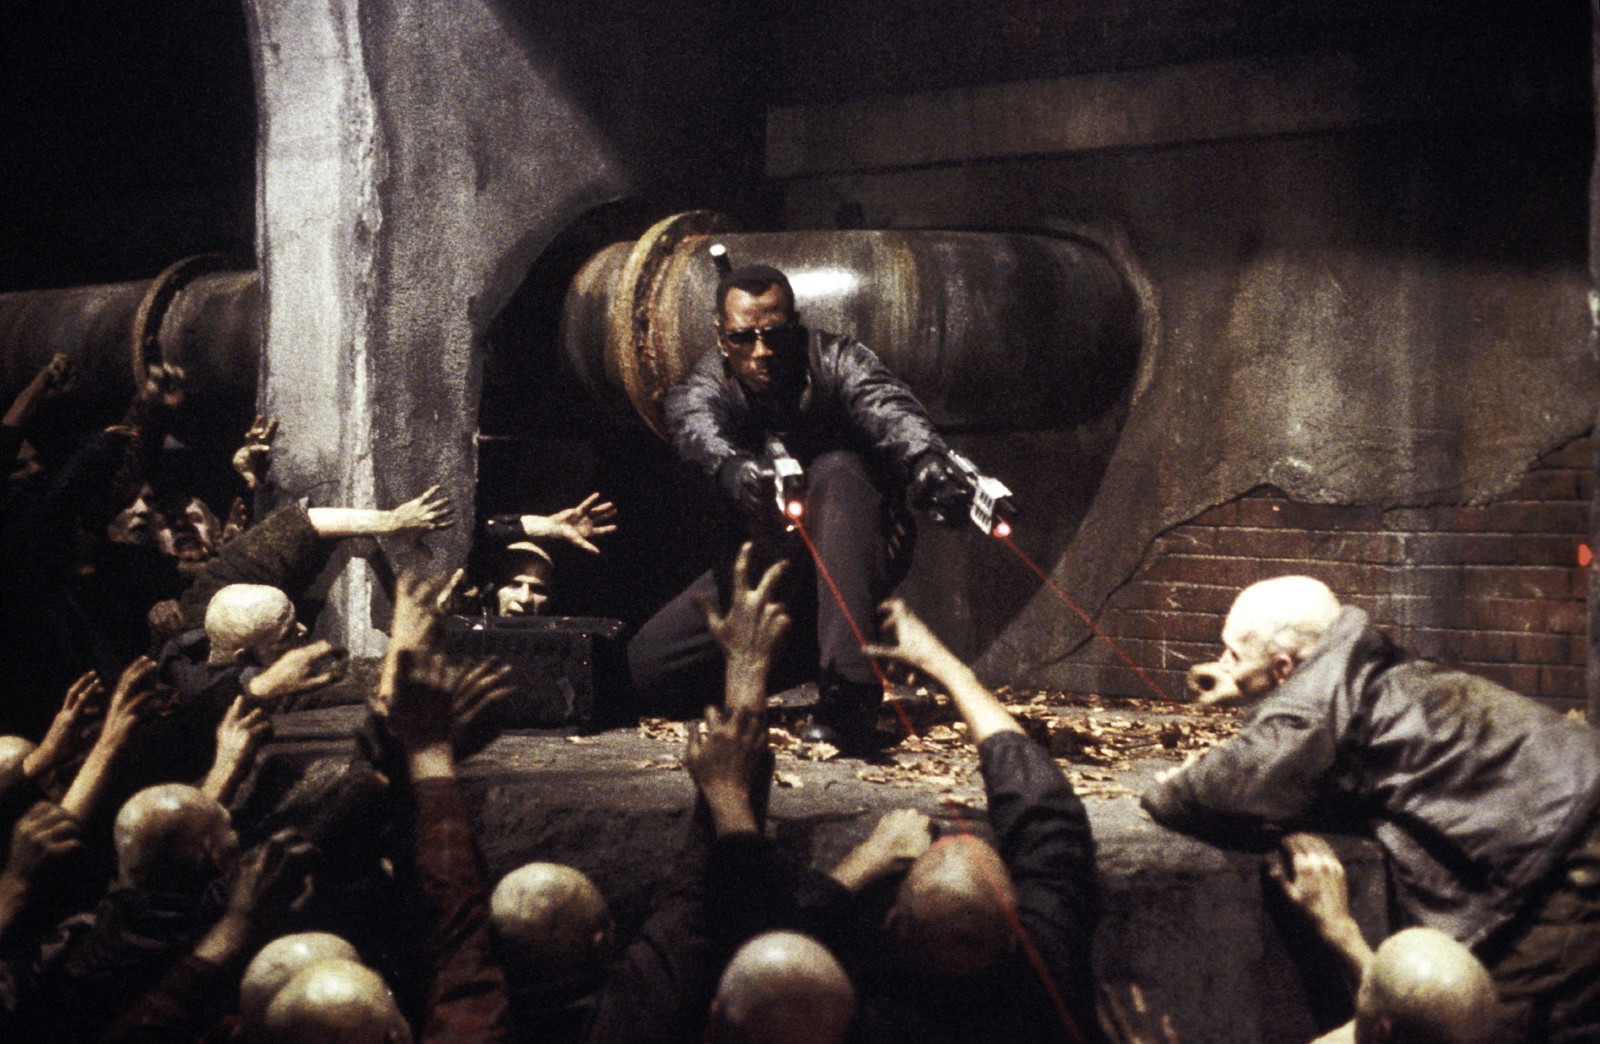 Blade II (2002) [Credit: New Line Cinema Warner Bros.]